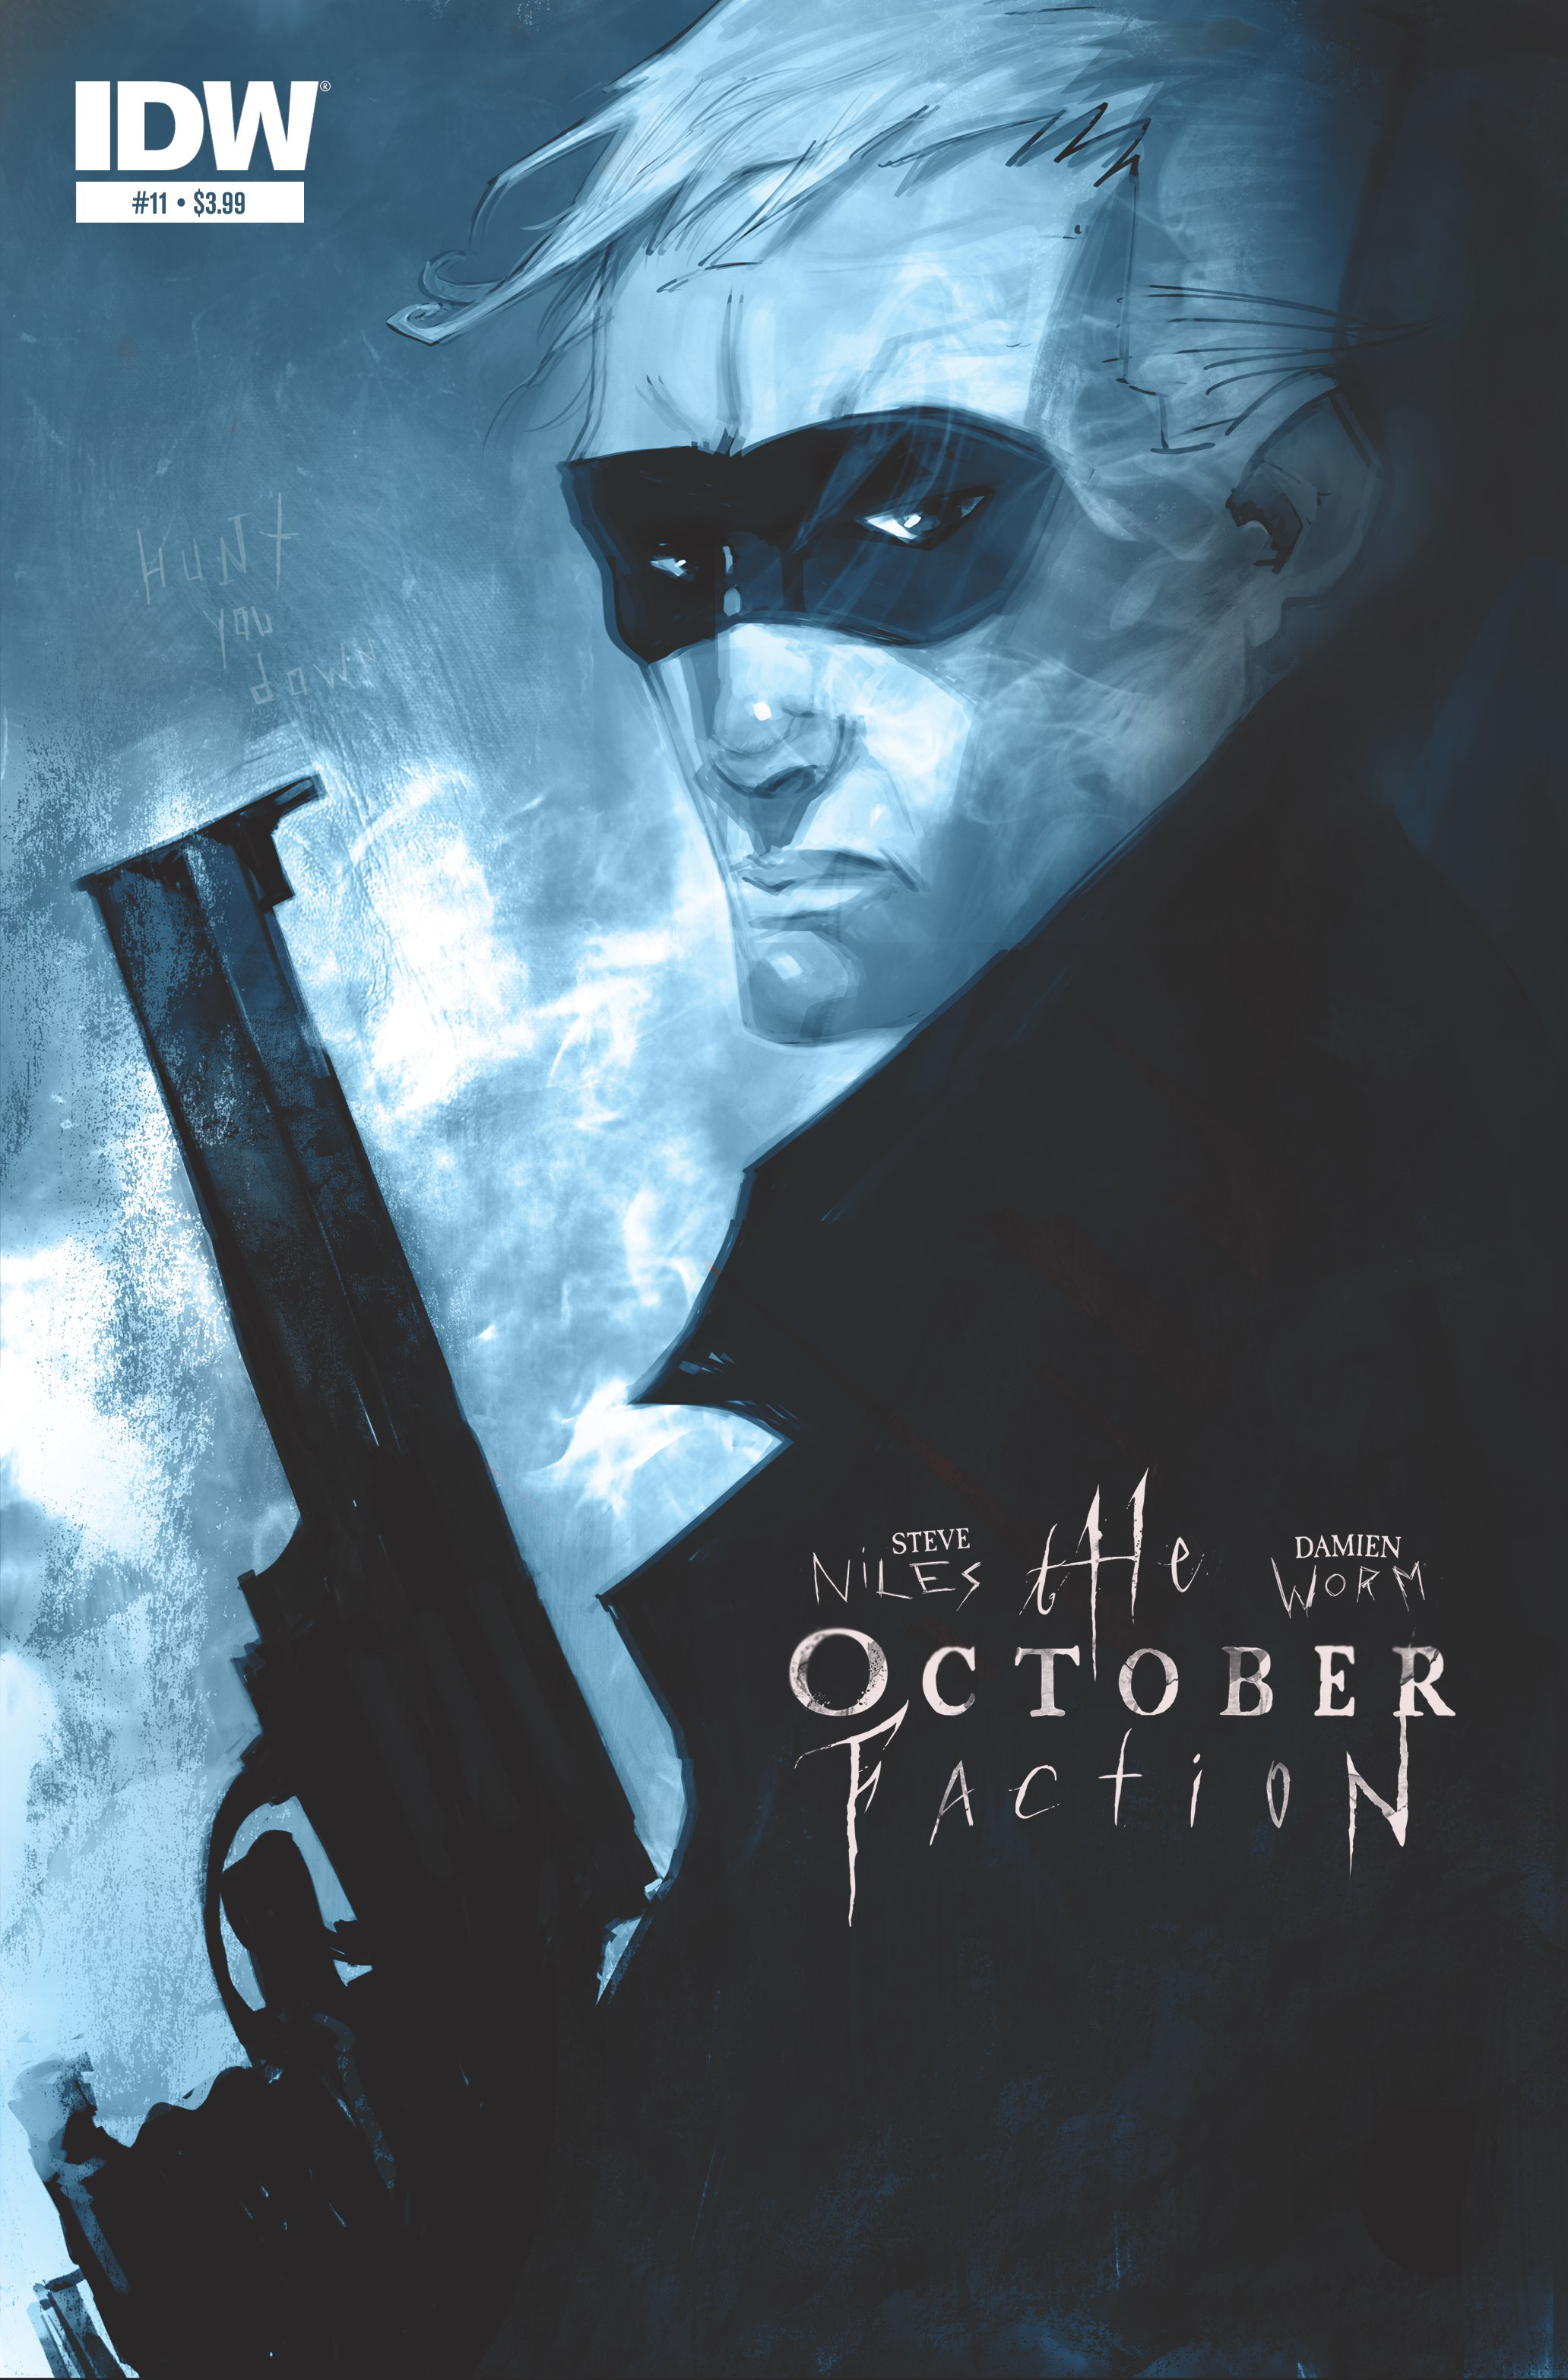 OCTOBER FACTION #11